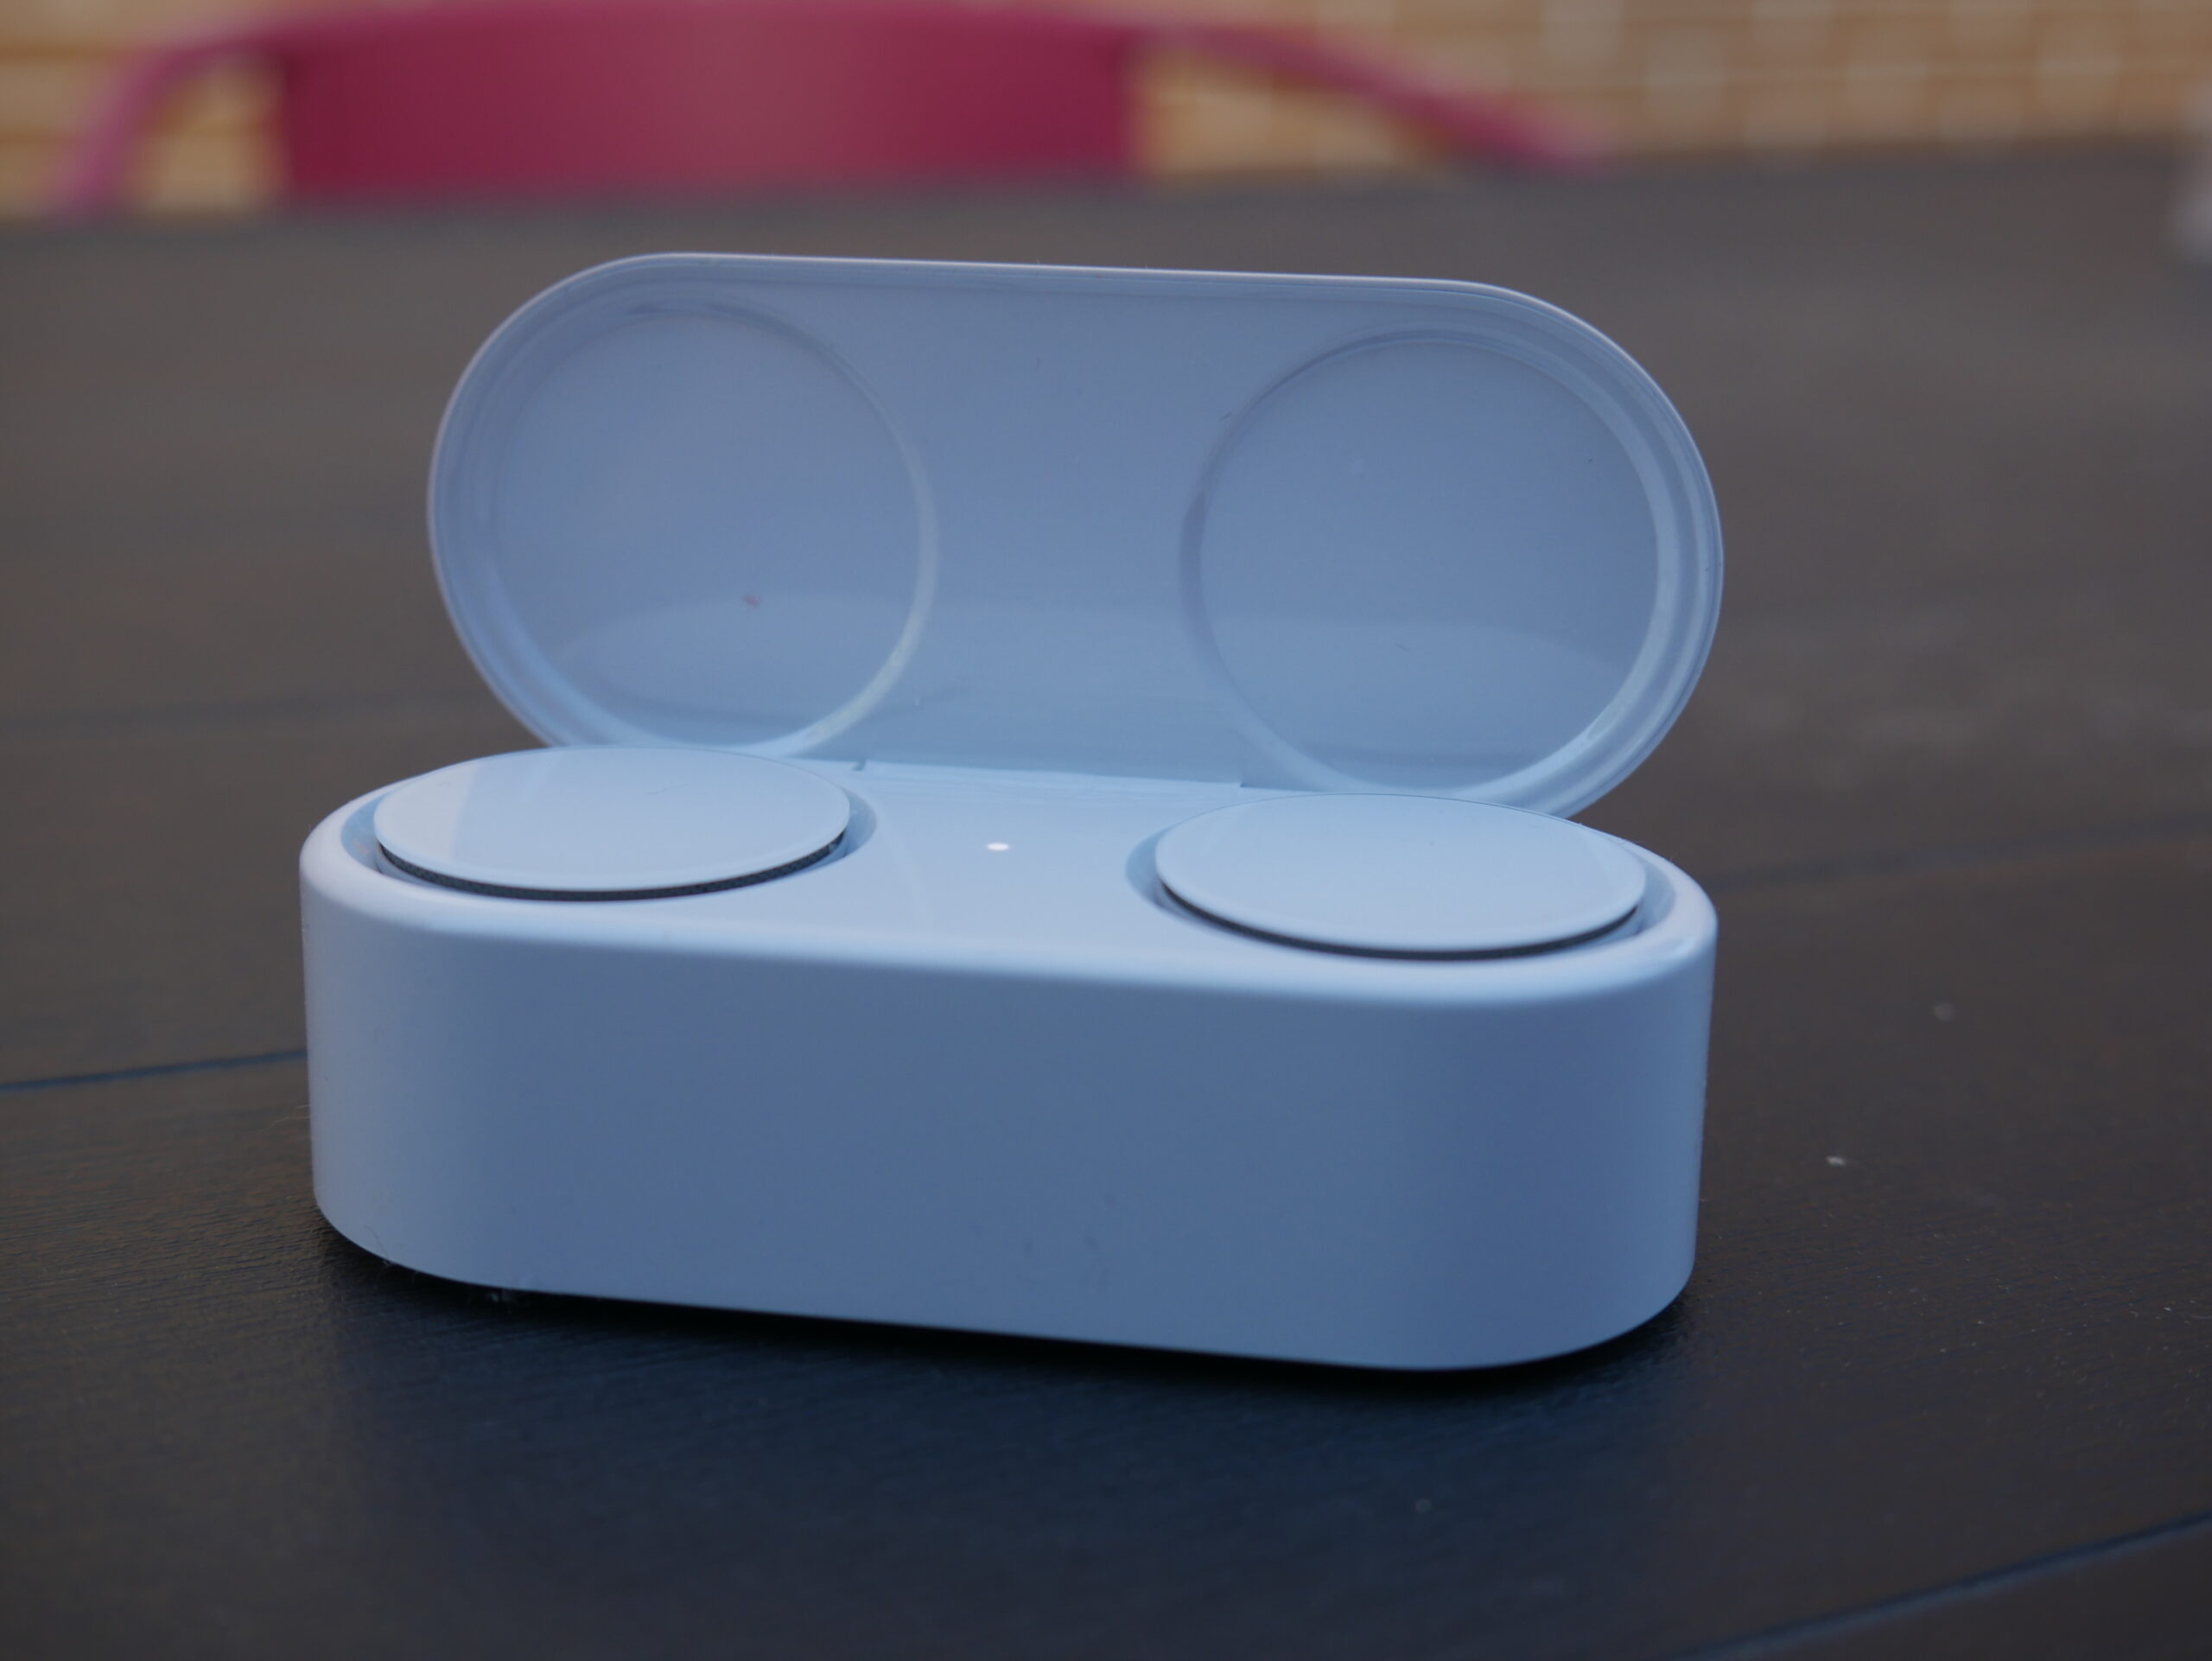 Surface Earbuds dentro de la caja